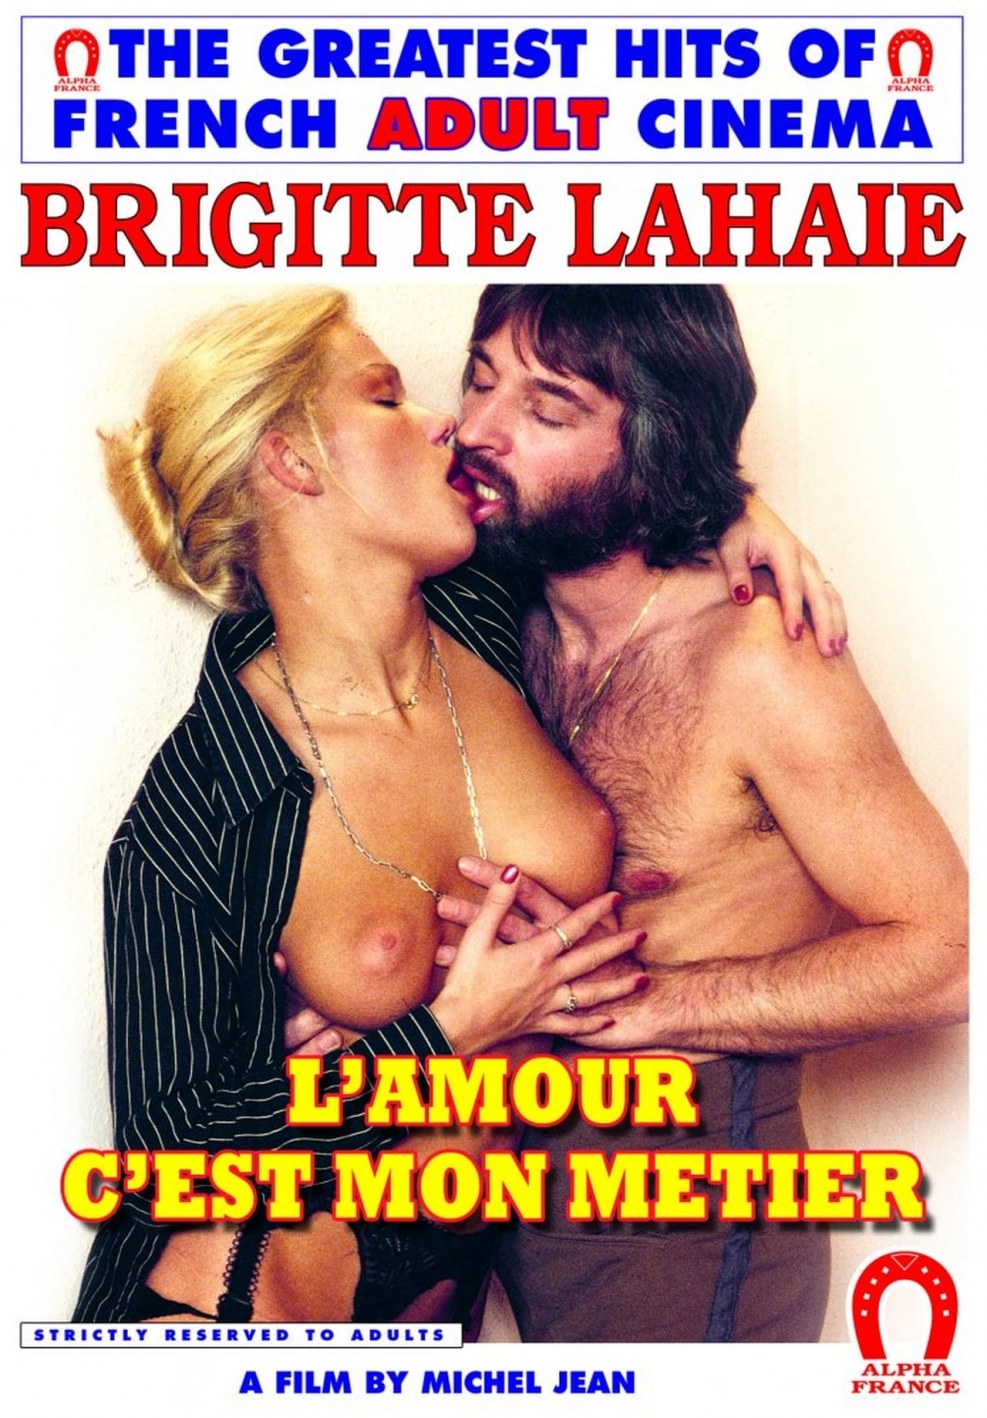 Alpha France Erotica Movies